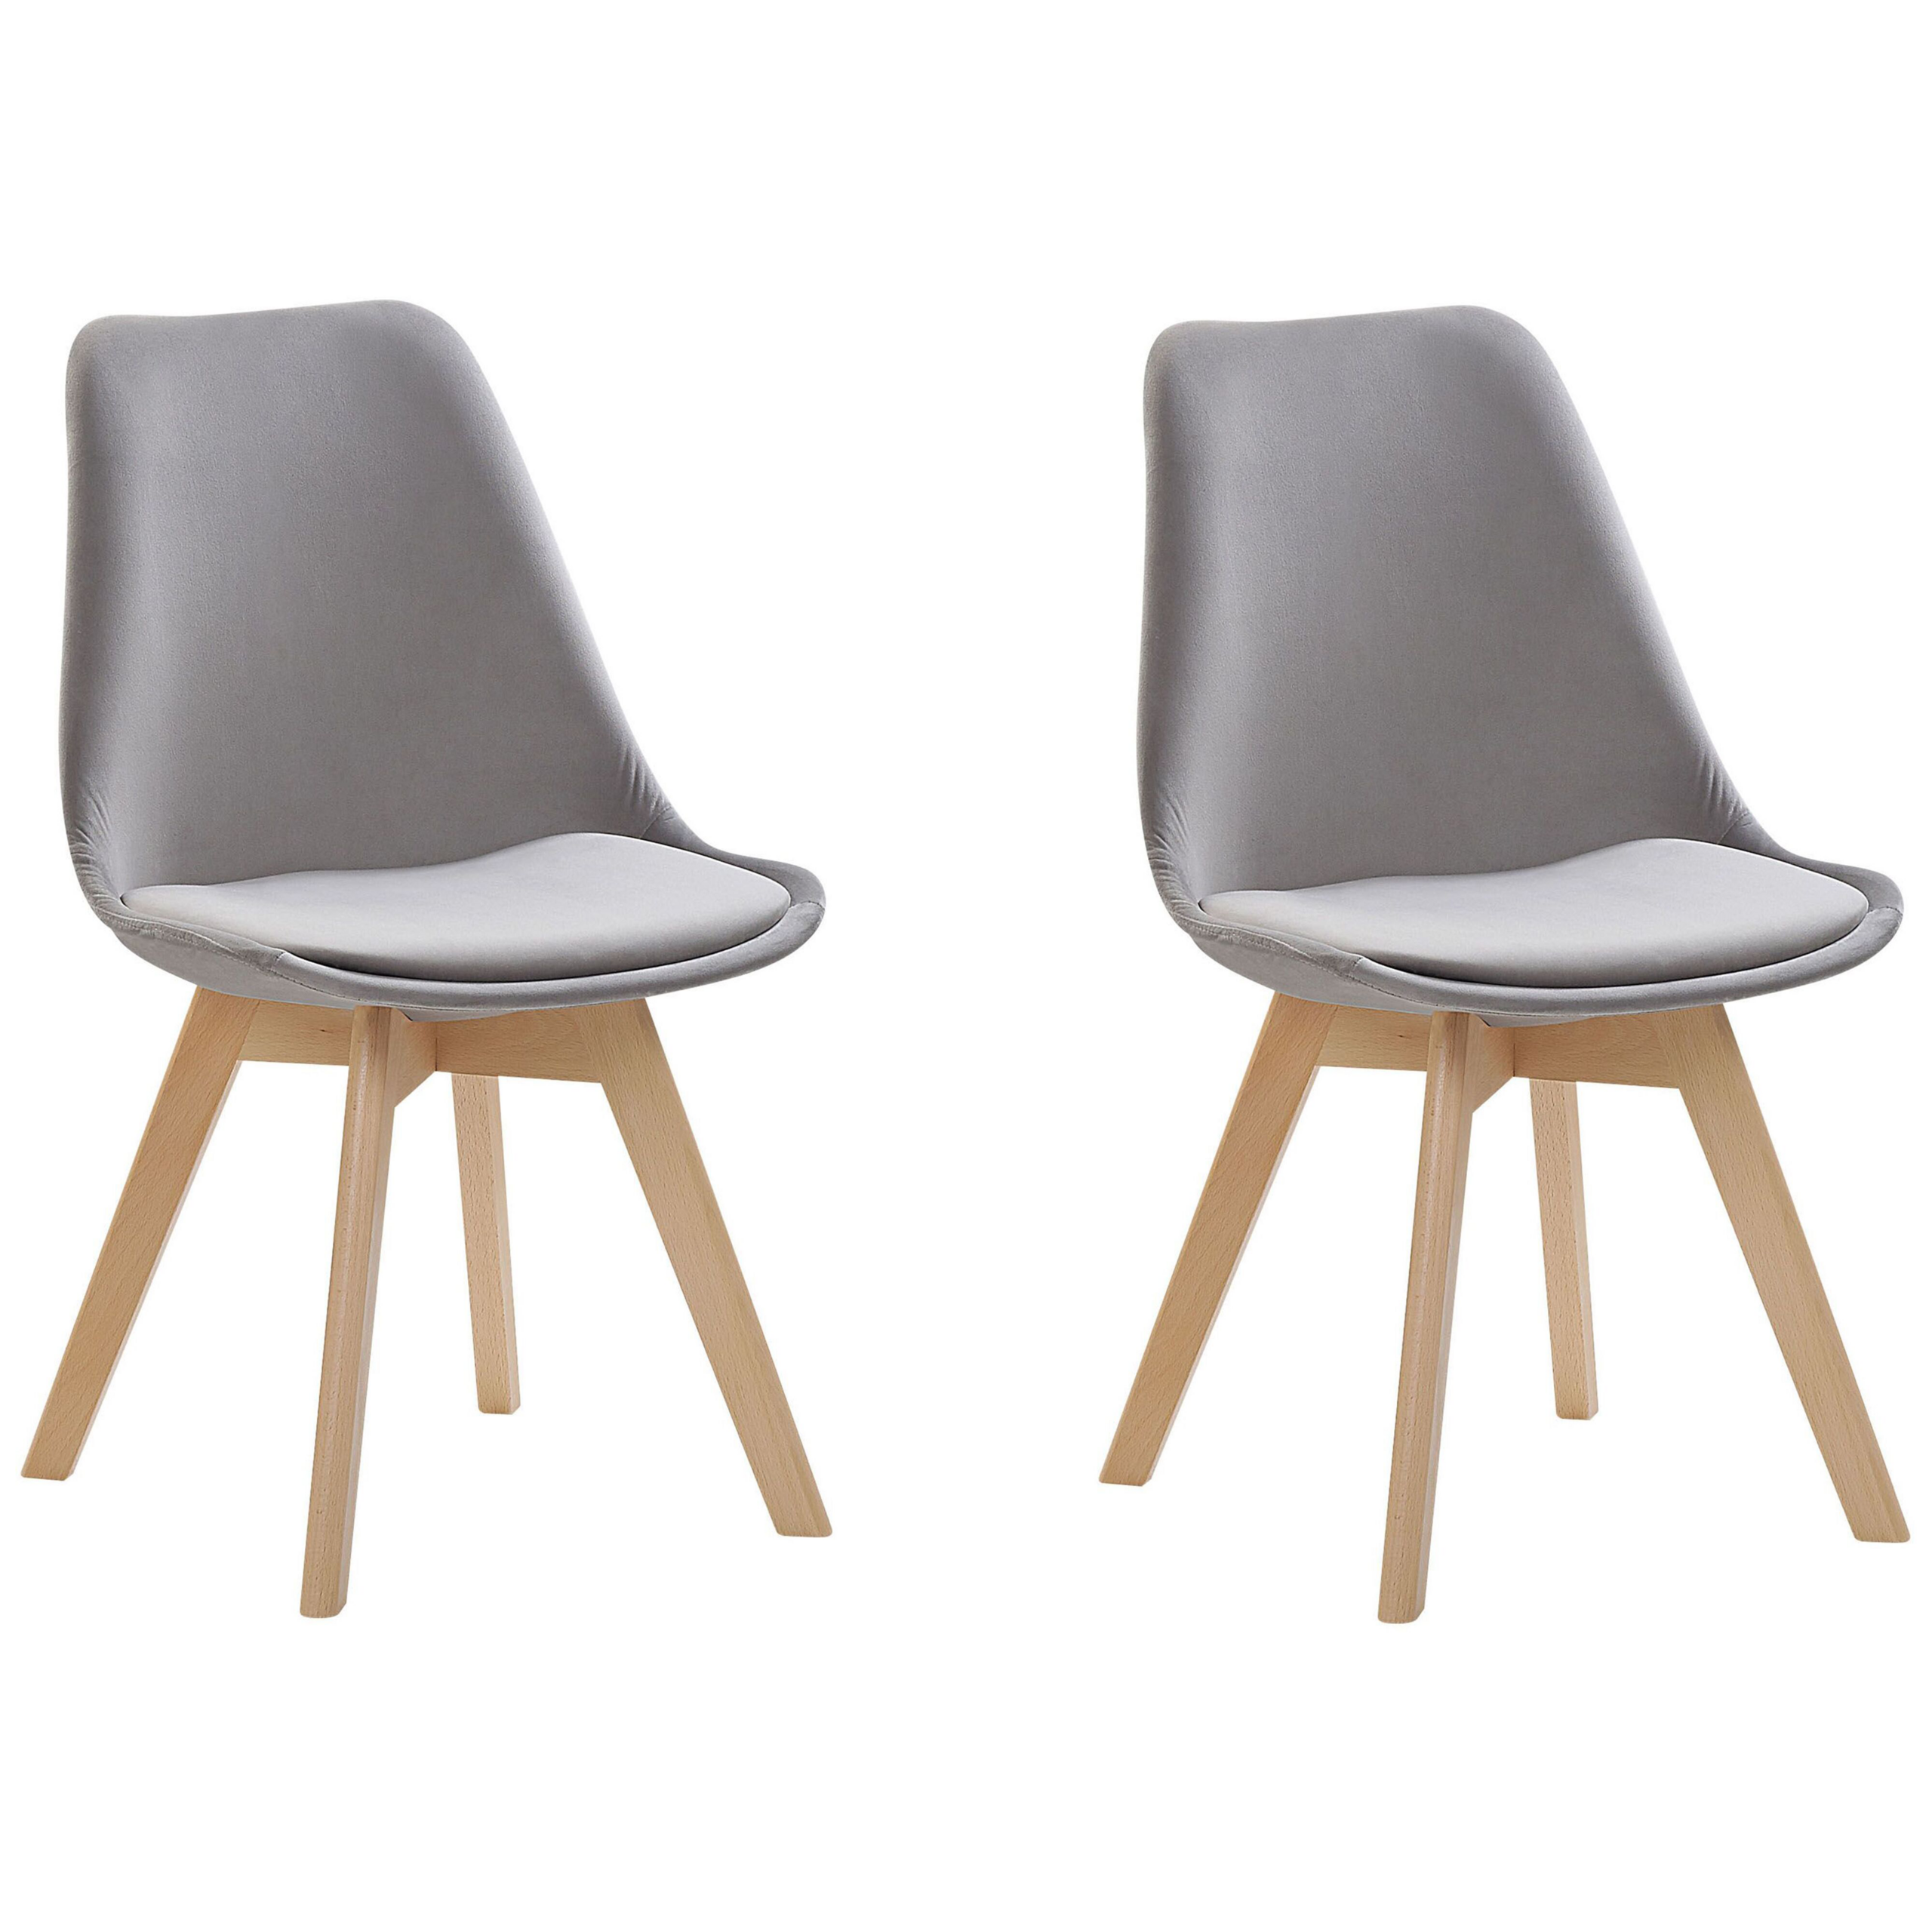 Beliani Set of 2 Dining Chairs Grey Velvet Upholstery Seat Sleek Wooden Legs Modern Design